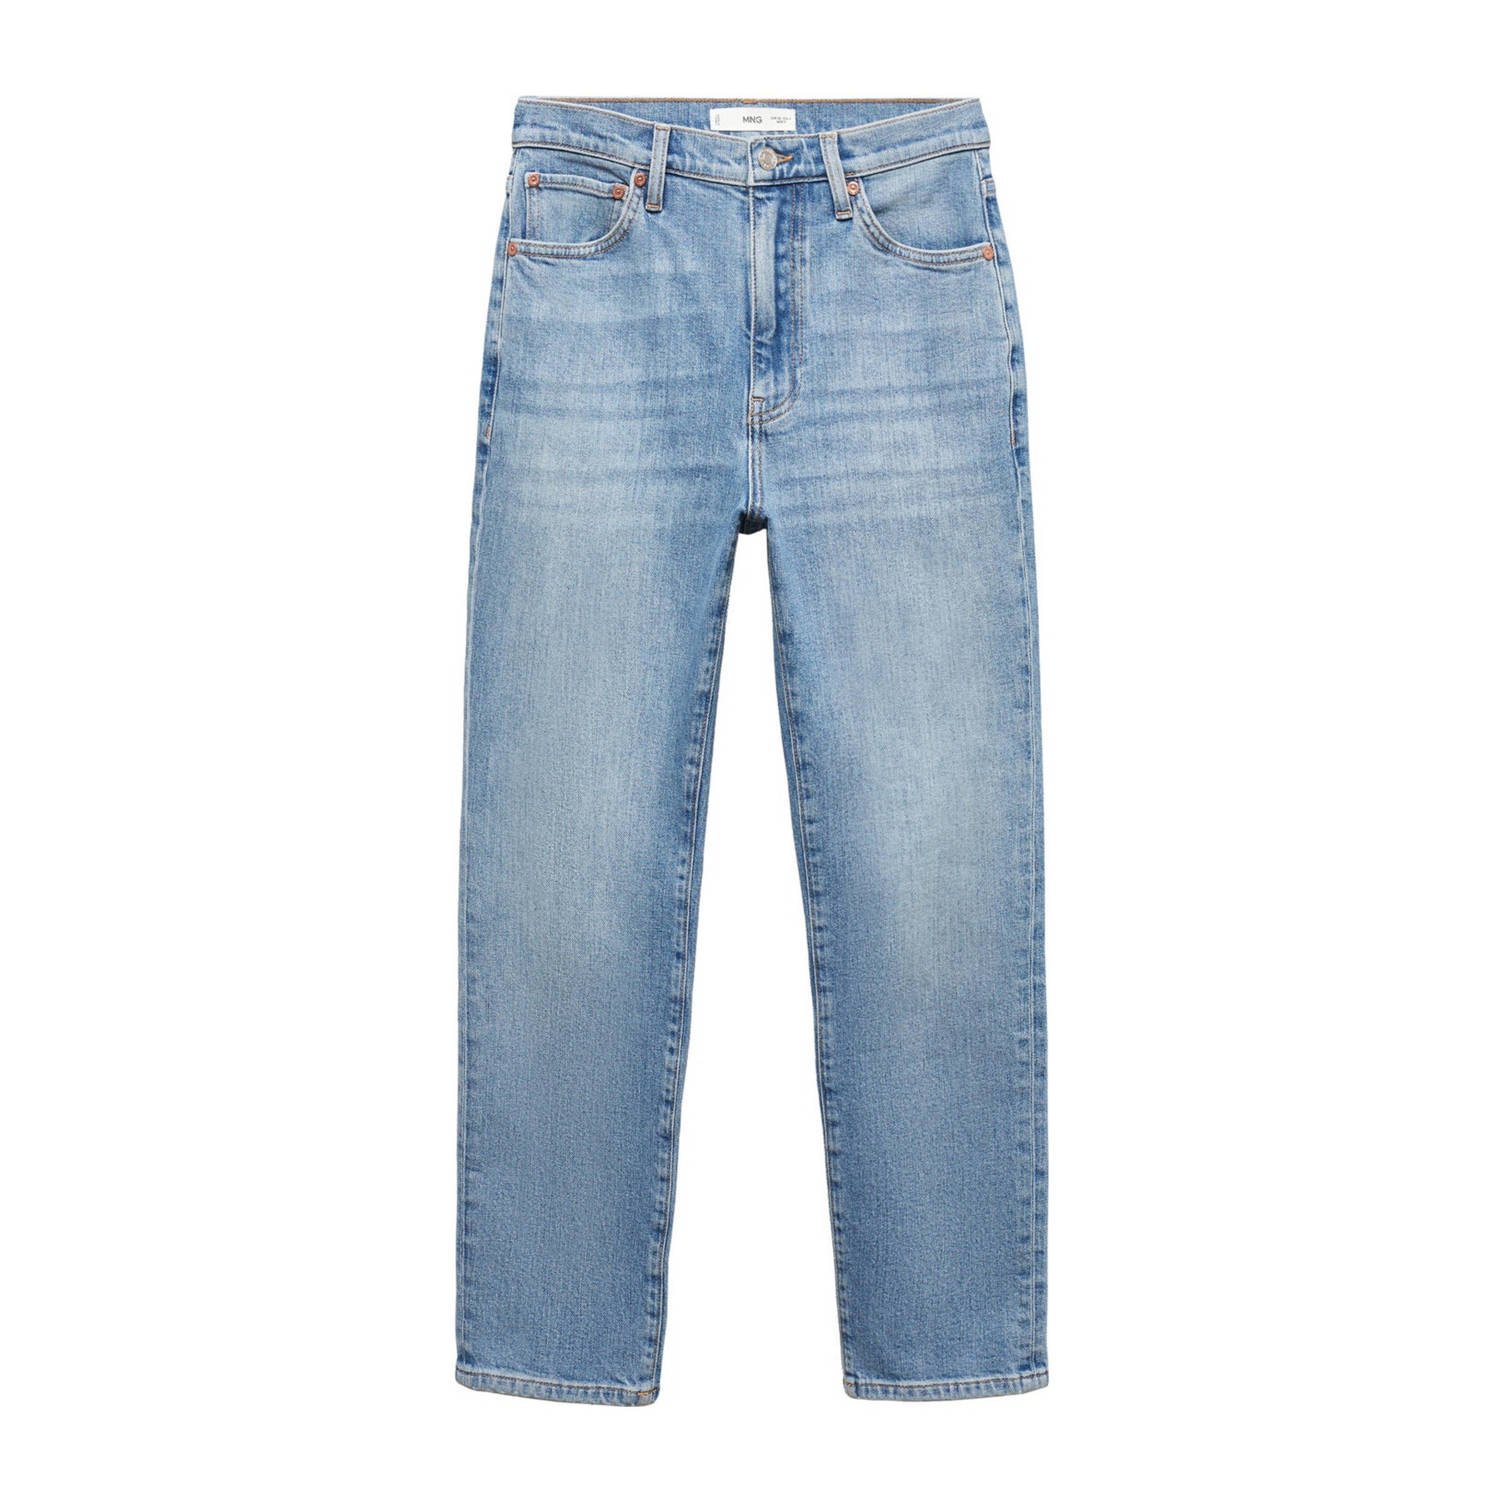 Mango cropped slim fit jeans light blue denim